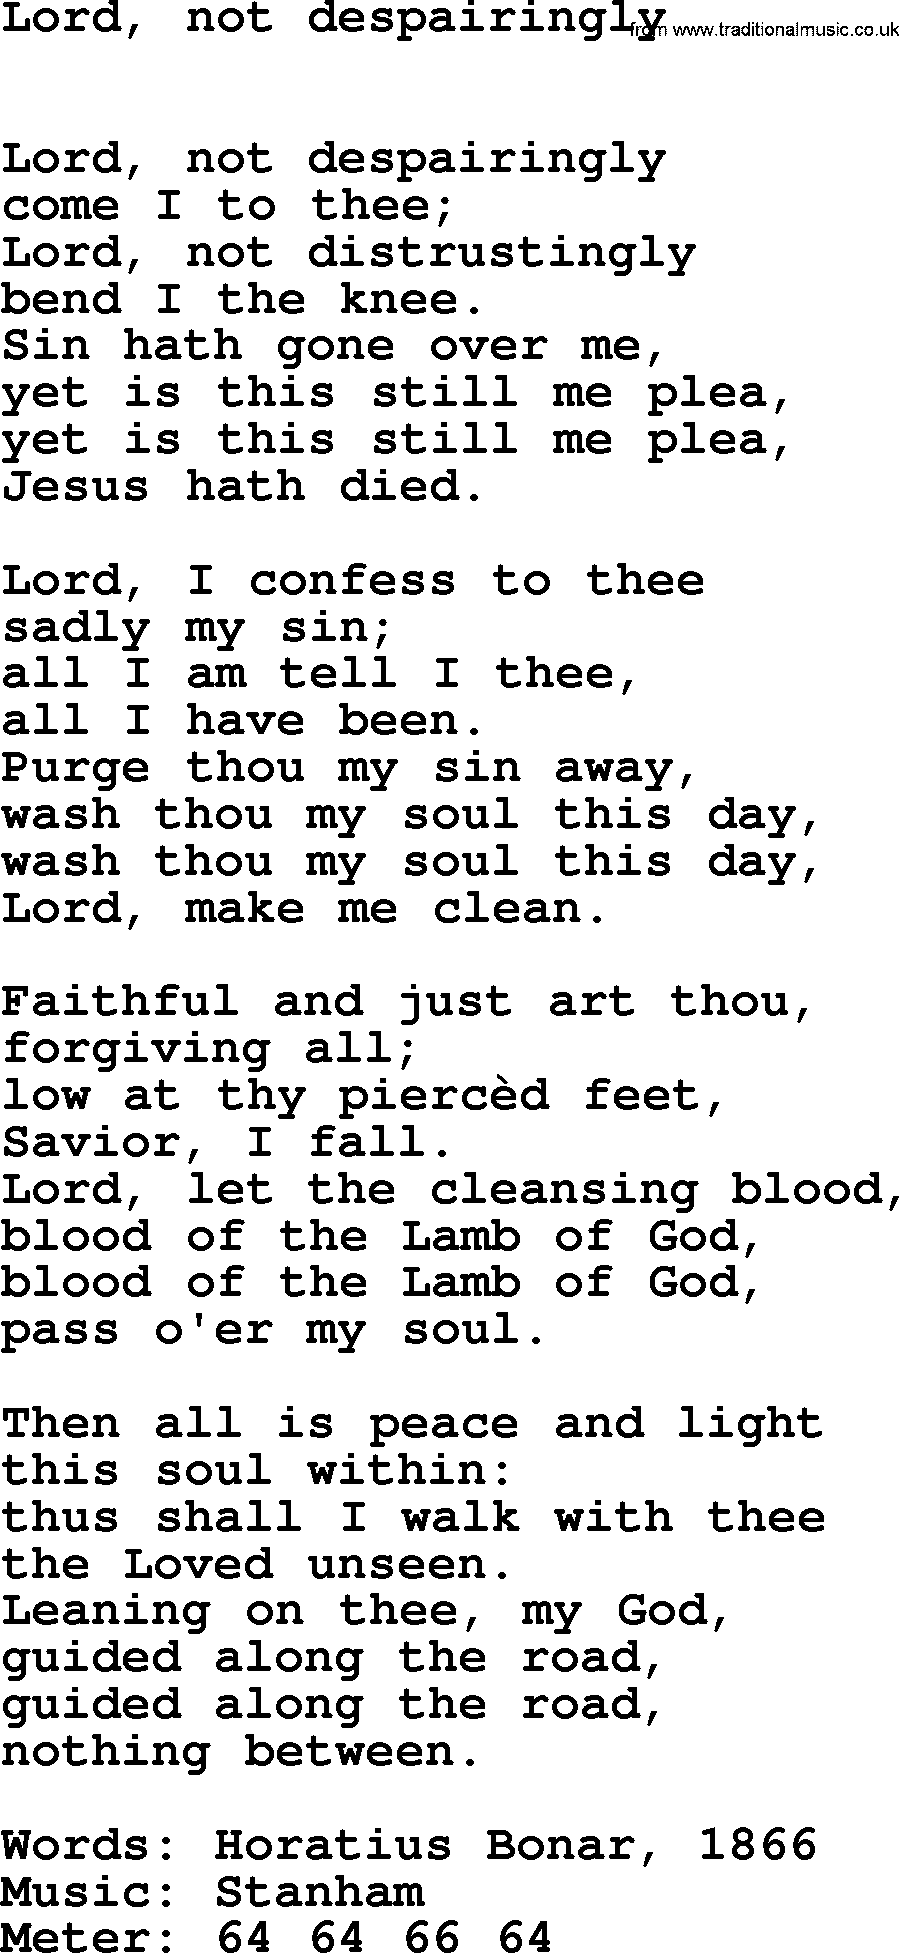 Book of Common Praise Hymn: Lord, Not Despairingly.txt lyrics with midi music